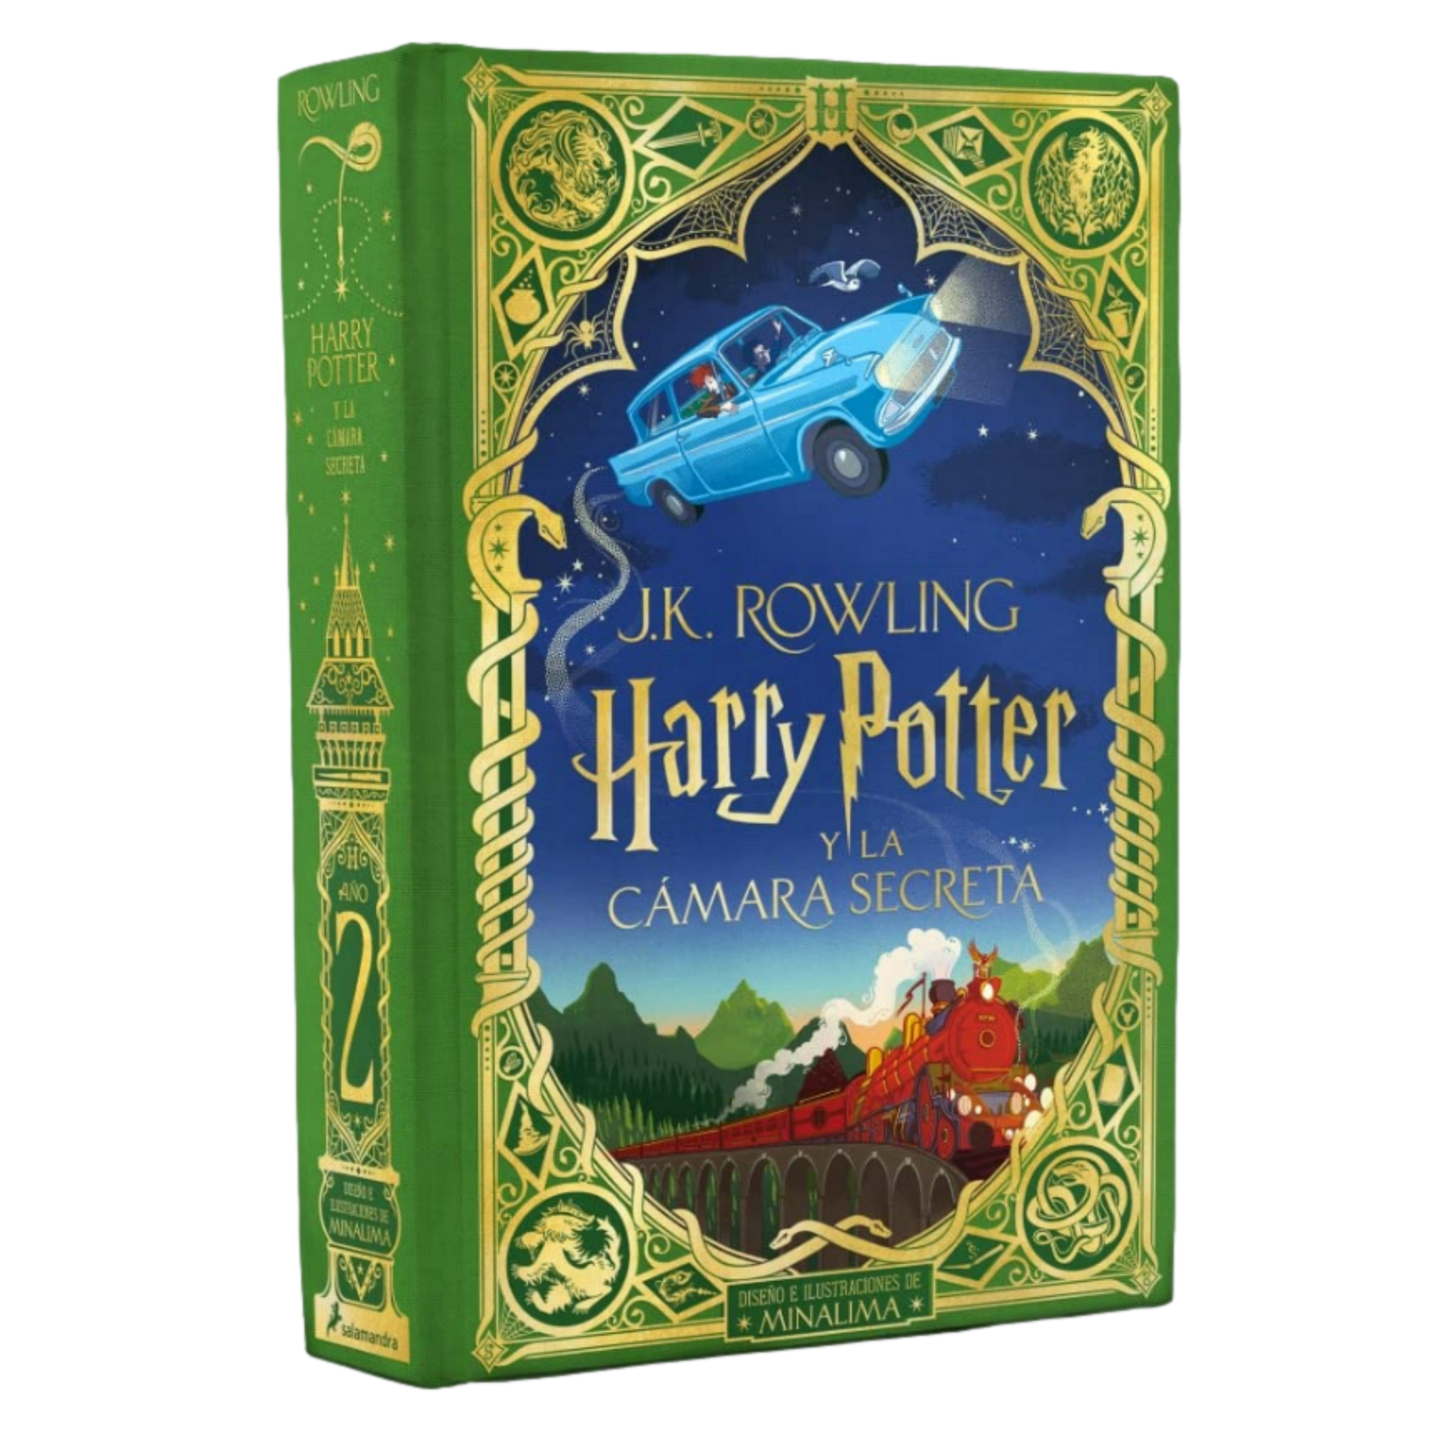 Pack Harry Potter 1 Y 2. Ediciones Ilustradas y Pop Up Minalima - J. K. Rowling (Joanne Kathleen Rowling)